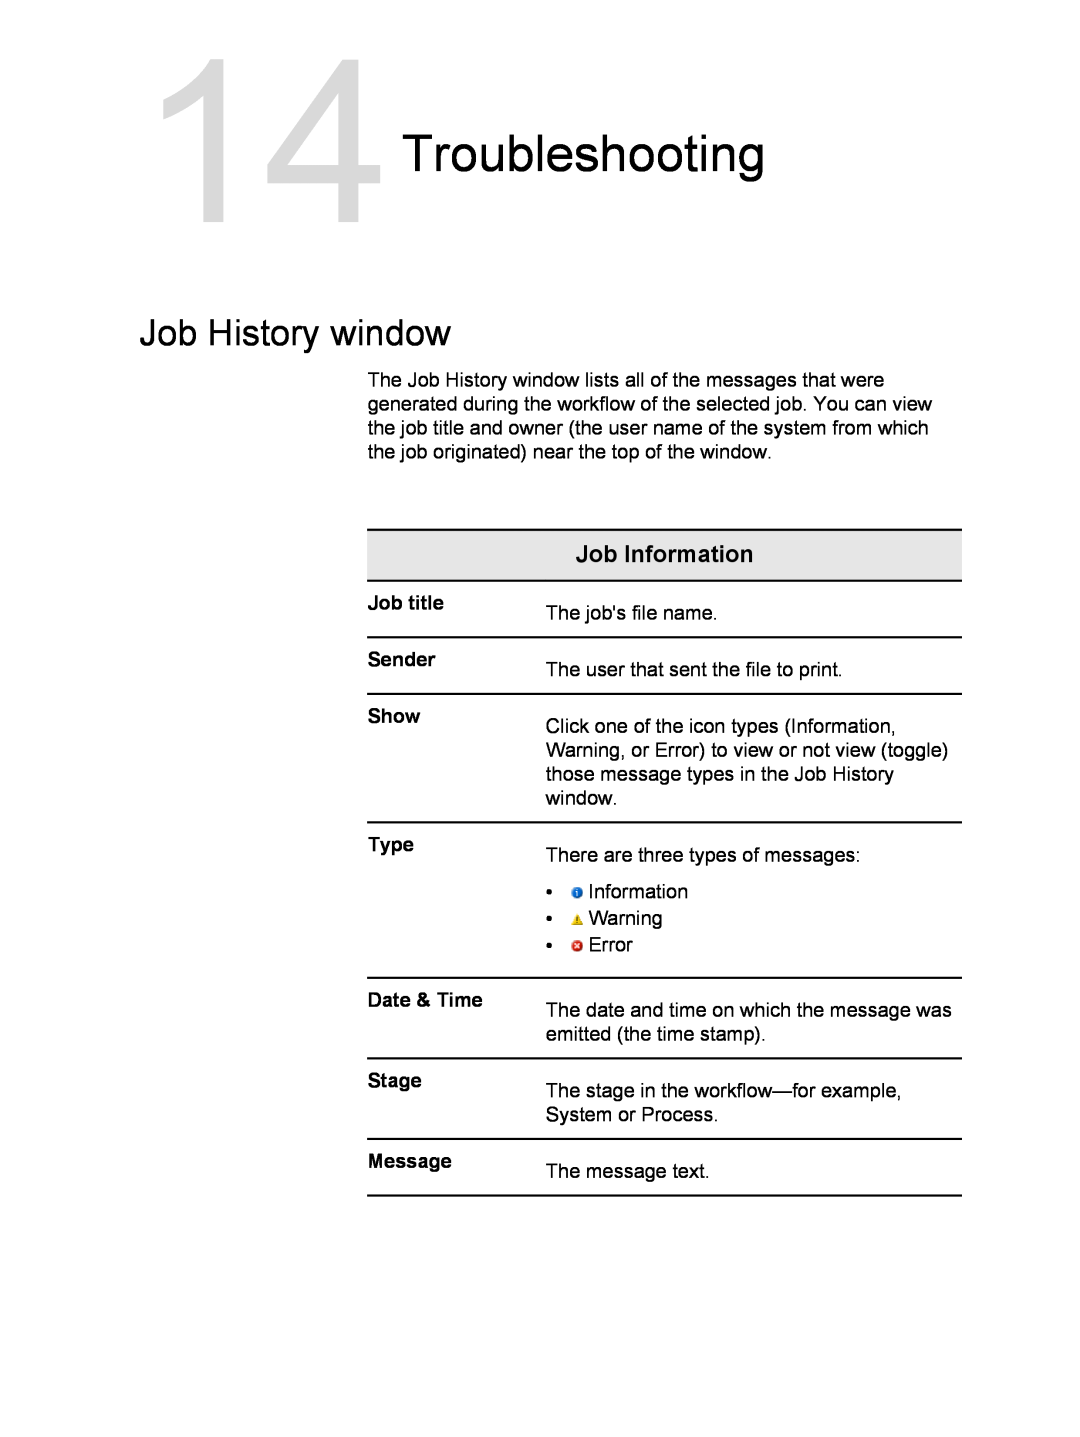 Xerox 550, 560 14Troubleshooting, Job History window, Job Information, Job title, Sender, Show, Type, Date & Time, Stage 